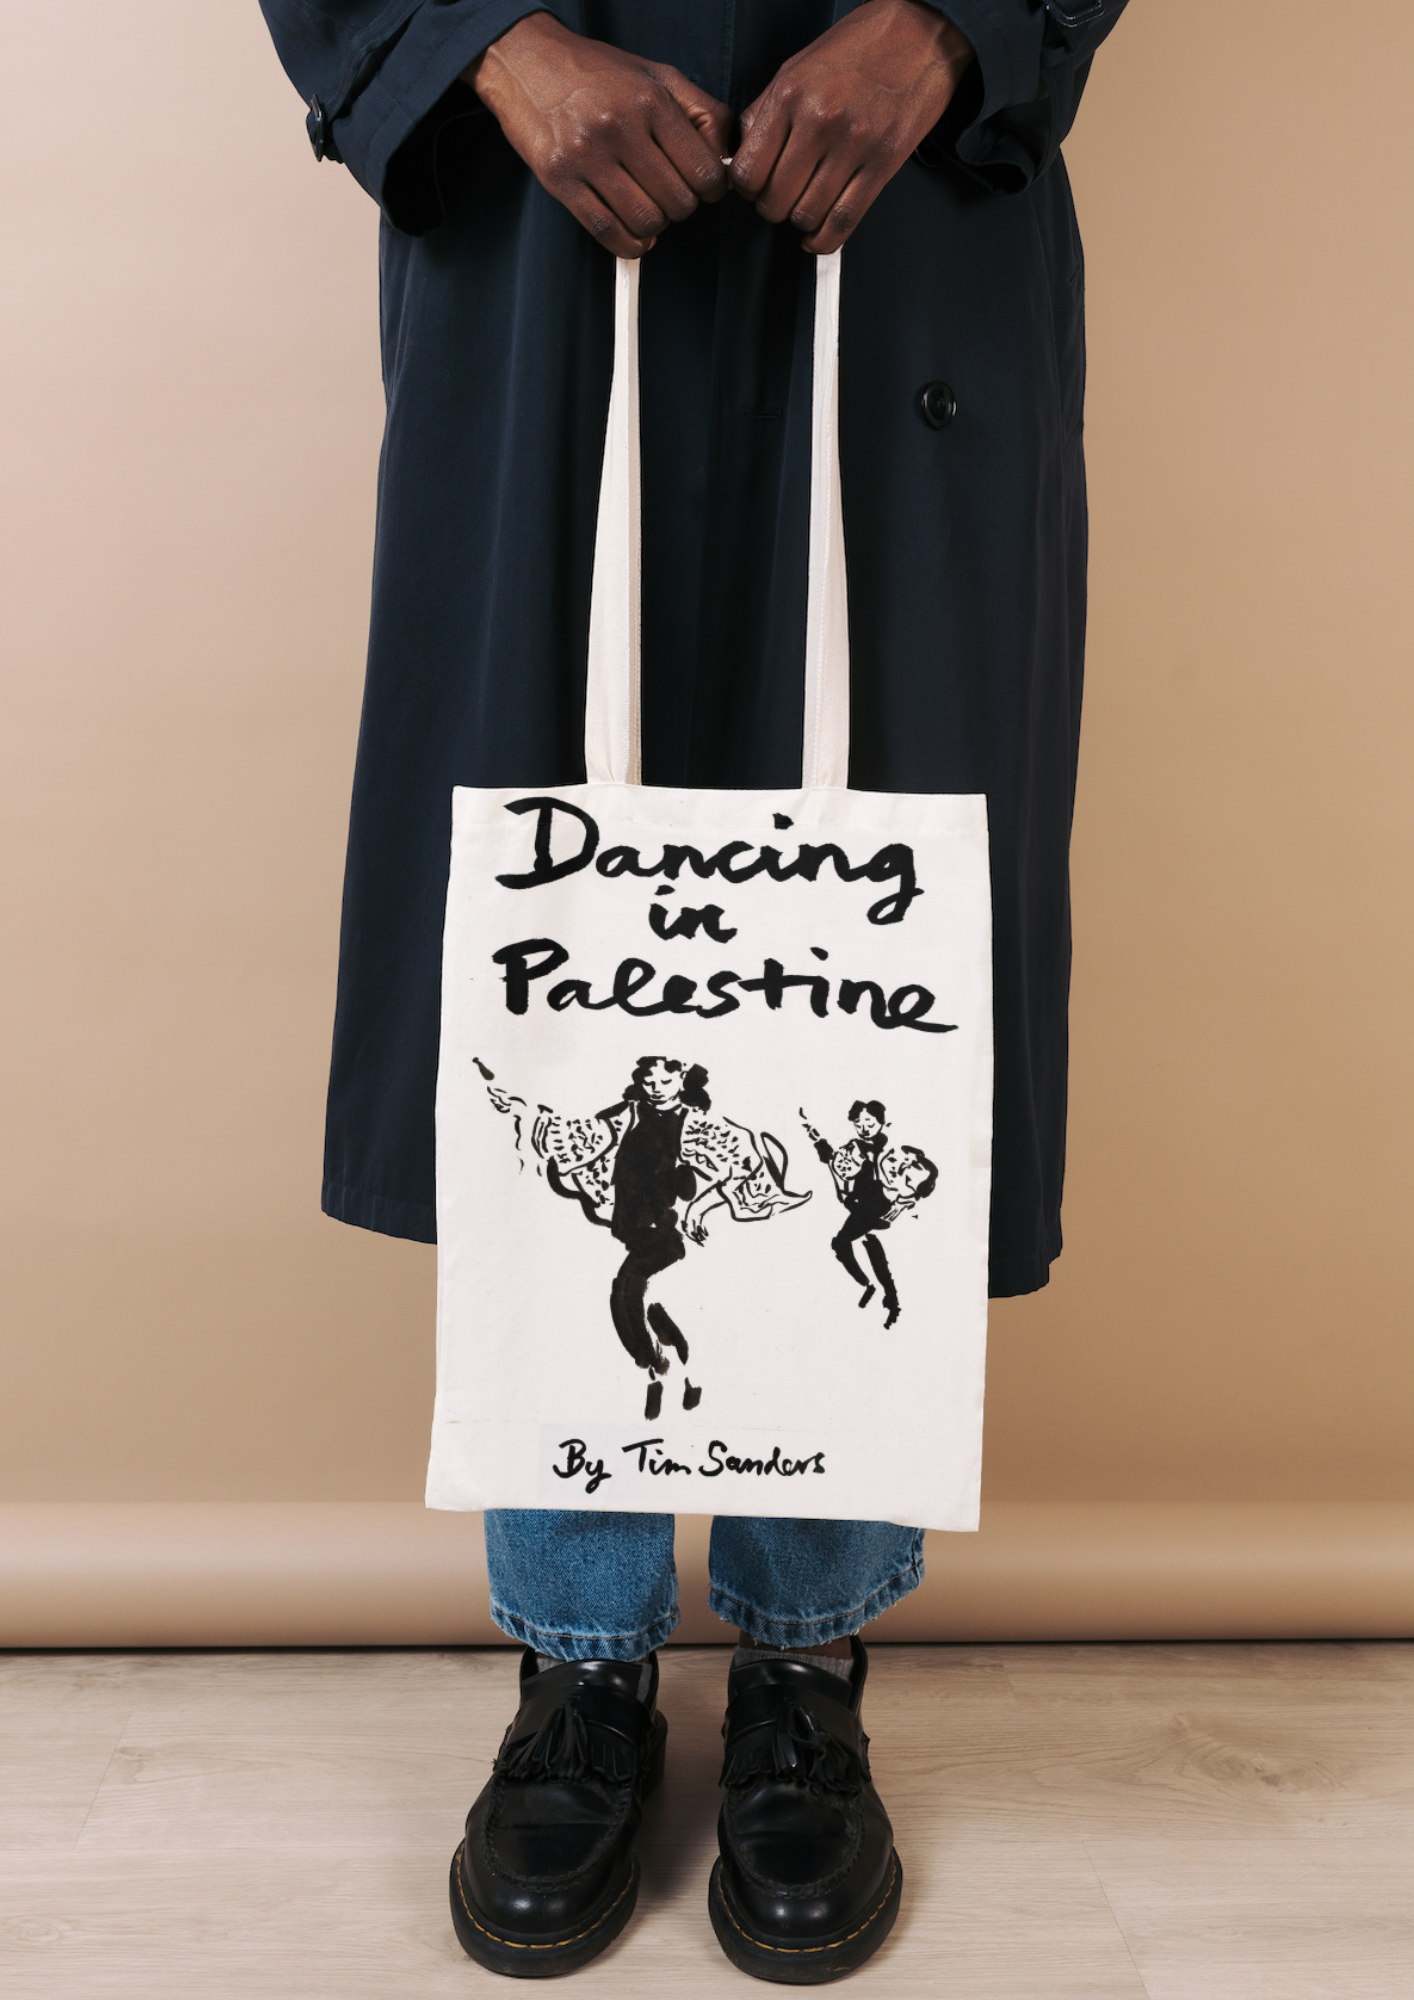 Dancing in Palestine Tote Bag